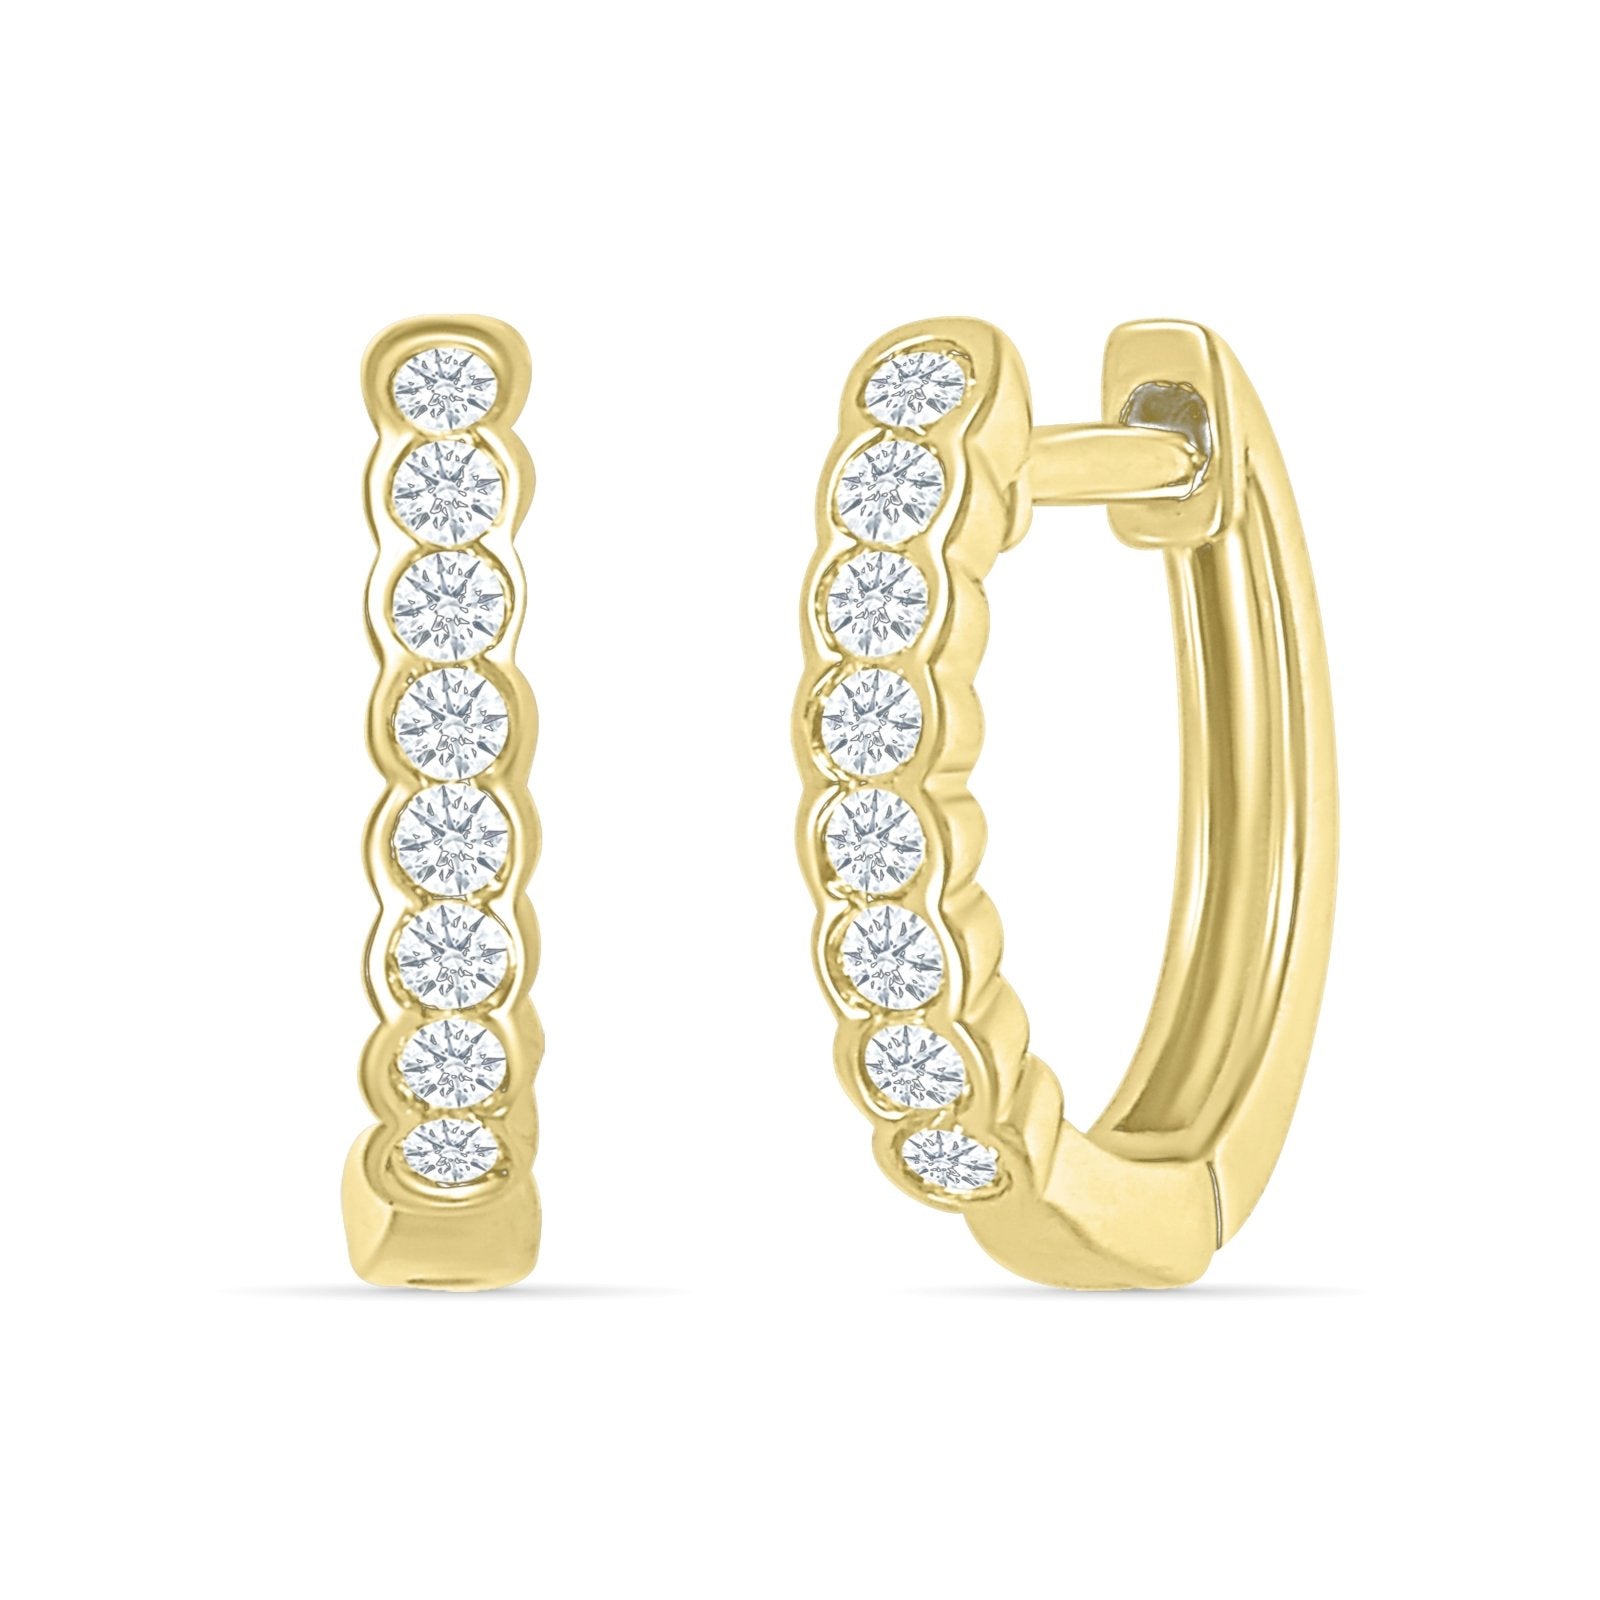 Bezel Set Diamond Hoop Earrings Earrings Estella Collection #product_description# 32680 Diamond Made to Order Traditional Stud #tag4# #tag5# #tag6# #tag7# #tag8# #tag9# #tag10#